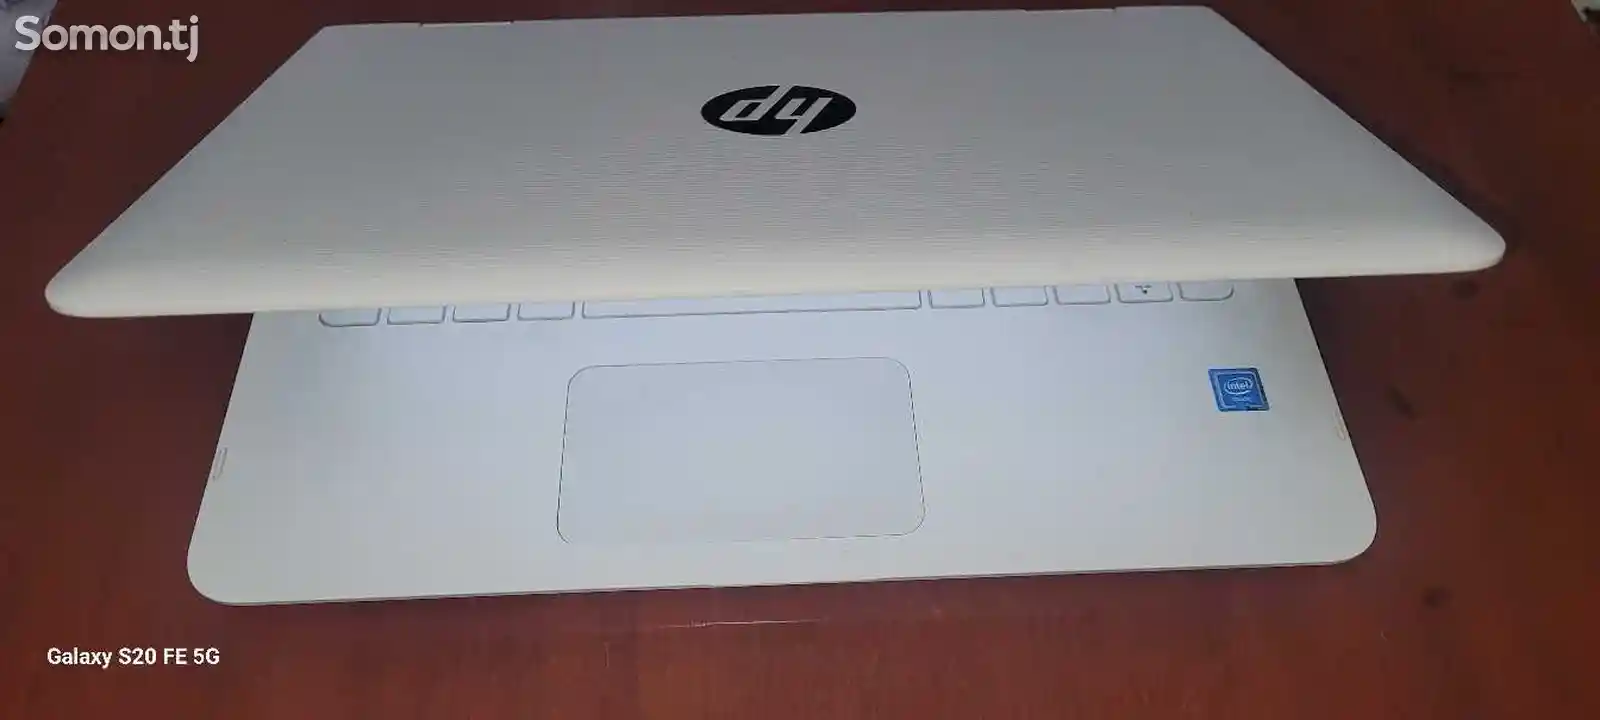 Ноутбук HP трансформер-5